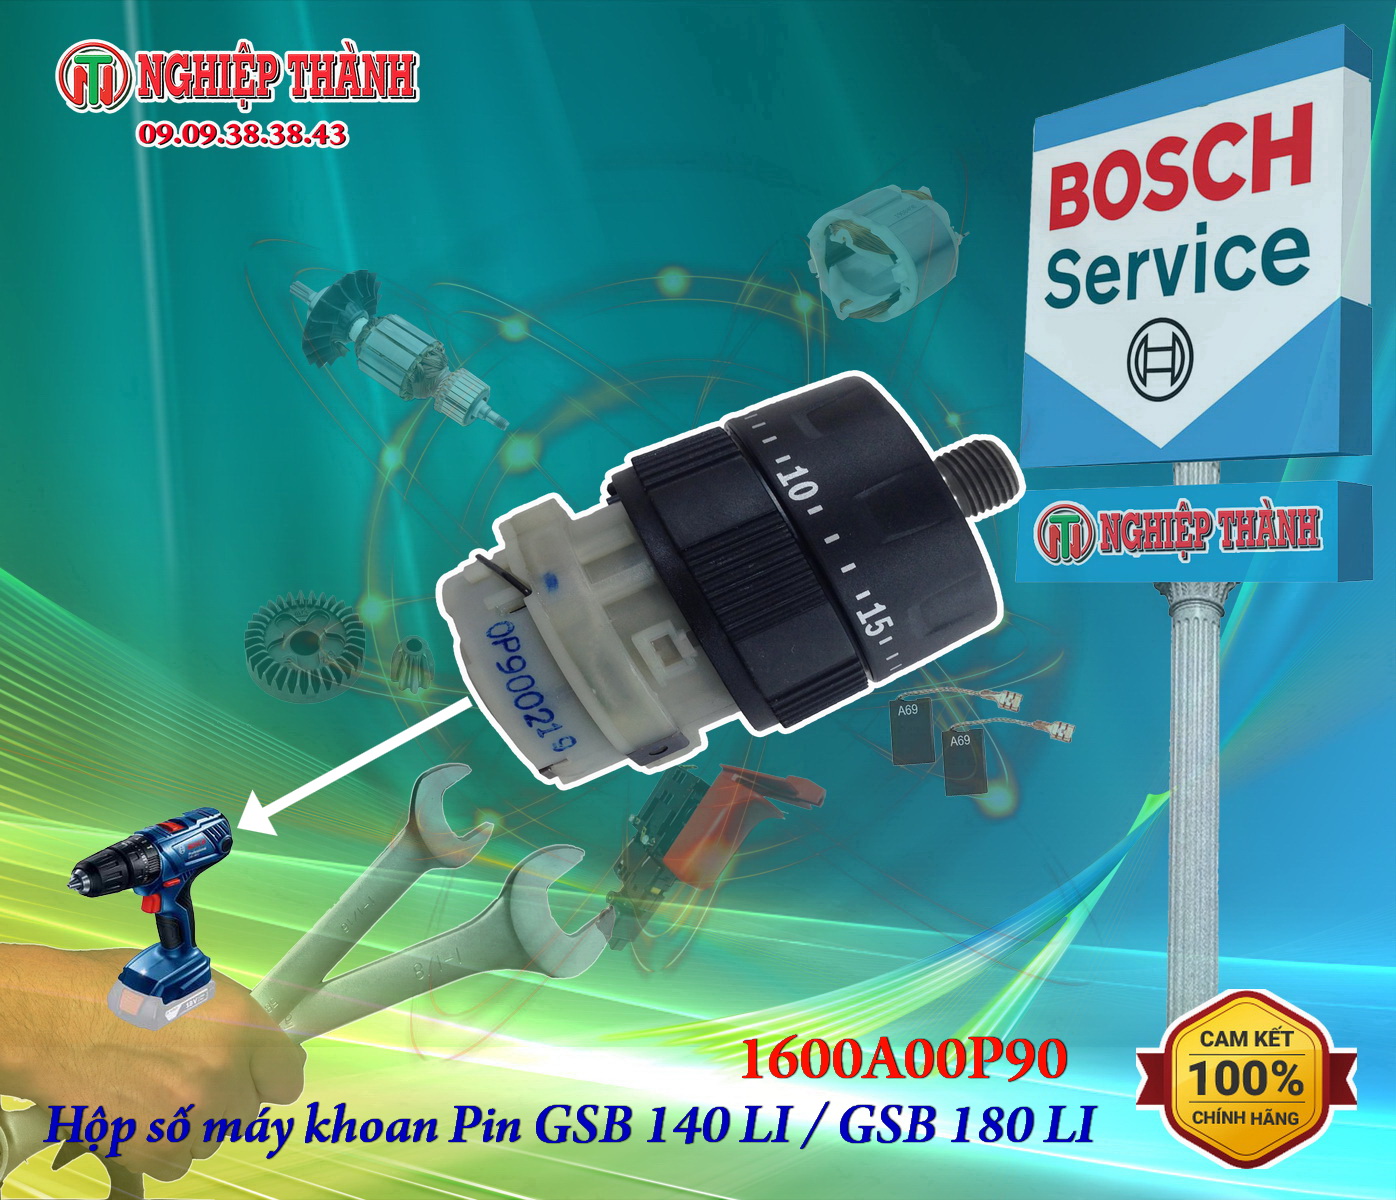 Hộp số máy khoan pin BOCSH GSB 140-LI / GSB 180-LI (1600A00P90)